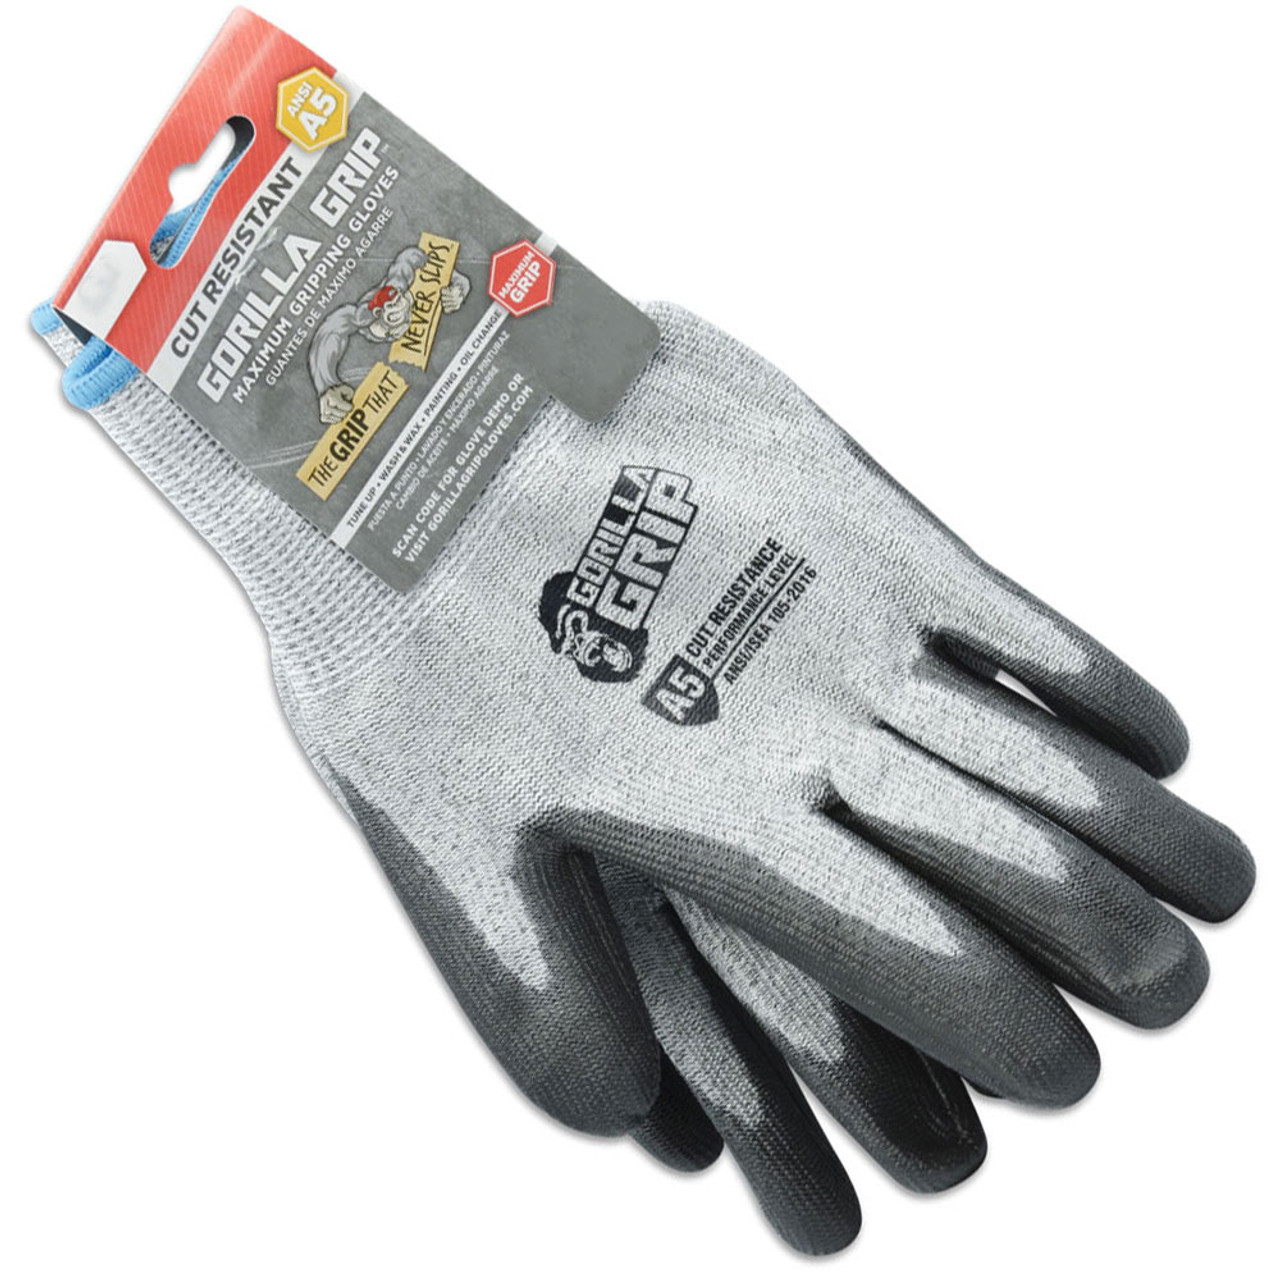 Gorilla grip gloves, Vale Aqueous A5